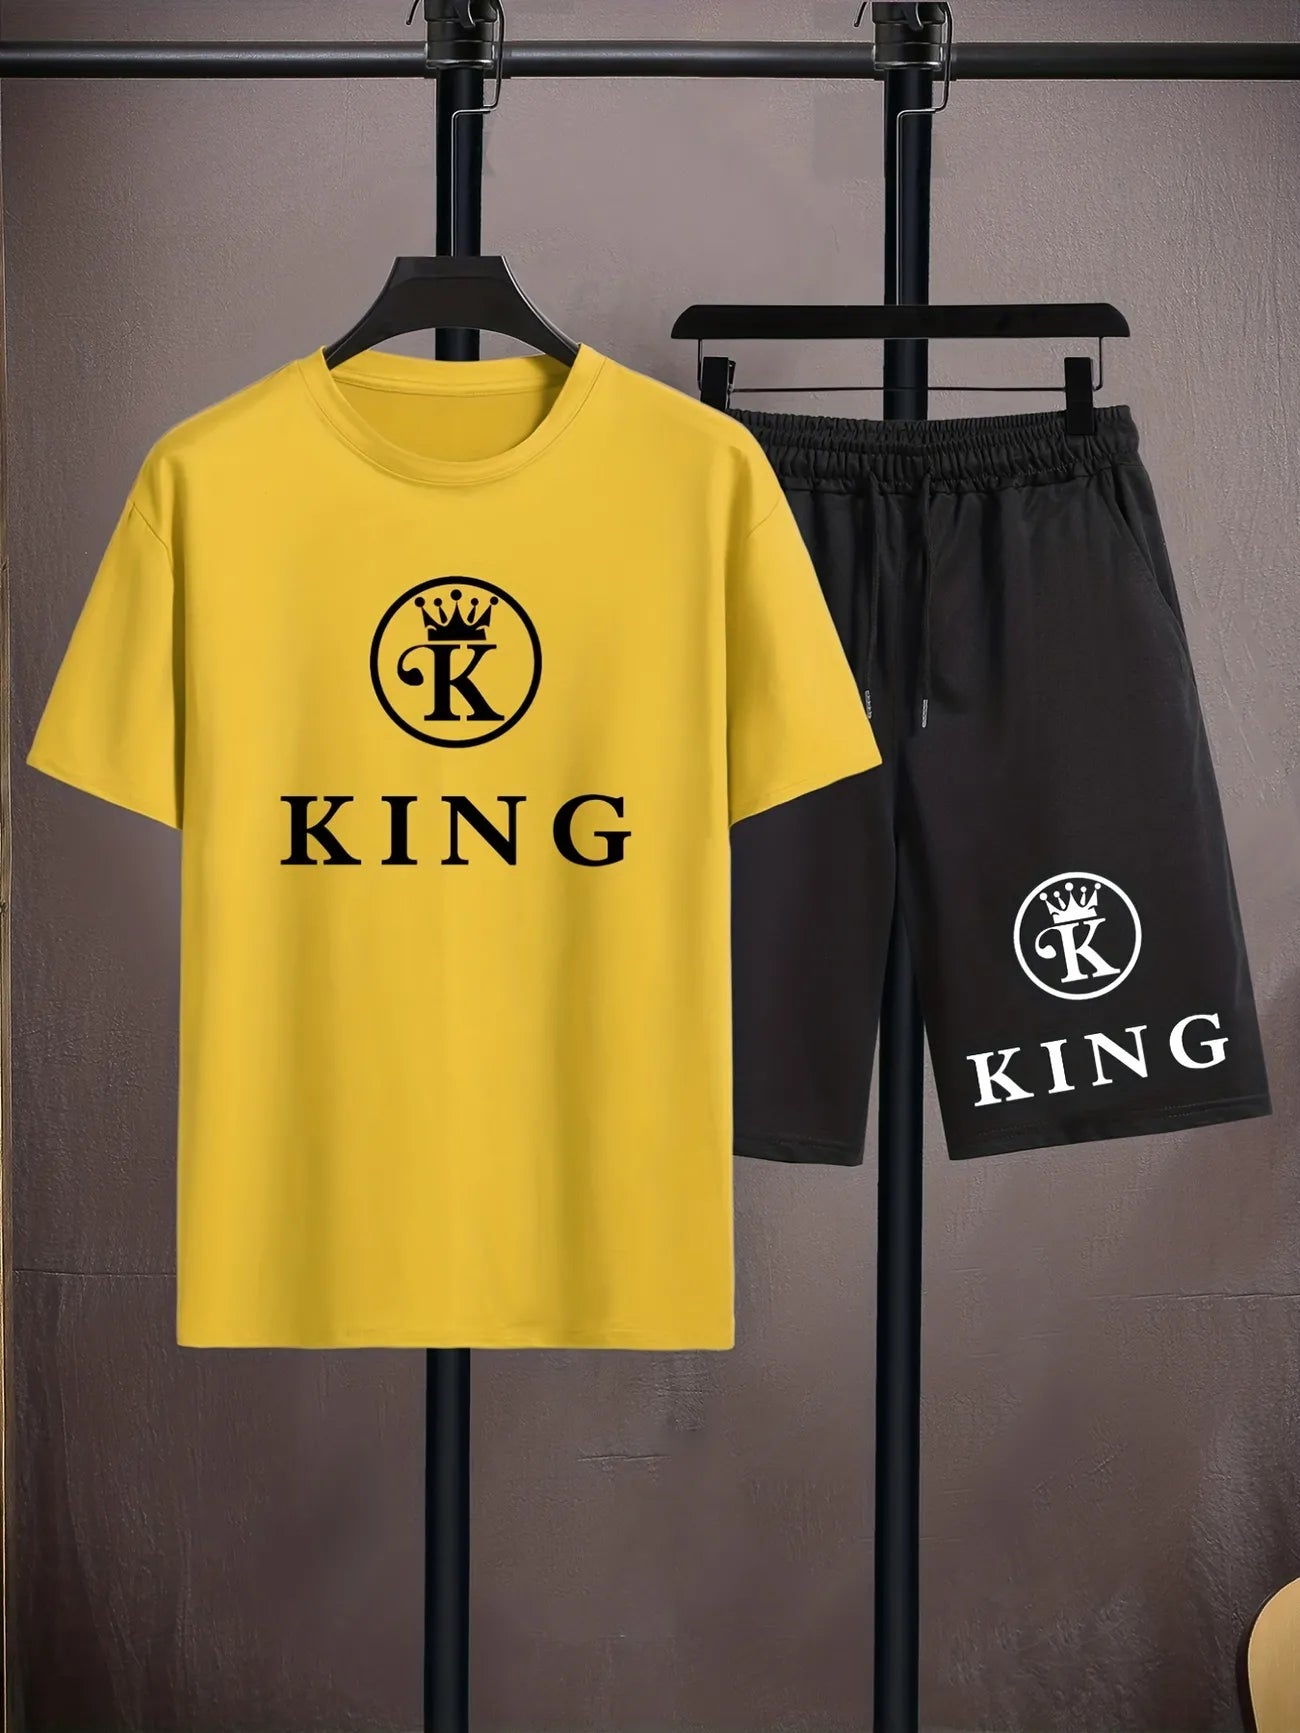 Mens Summer Shorts + T-Shirt Set - TTMSS161 - Yellow Black